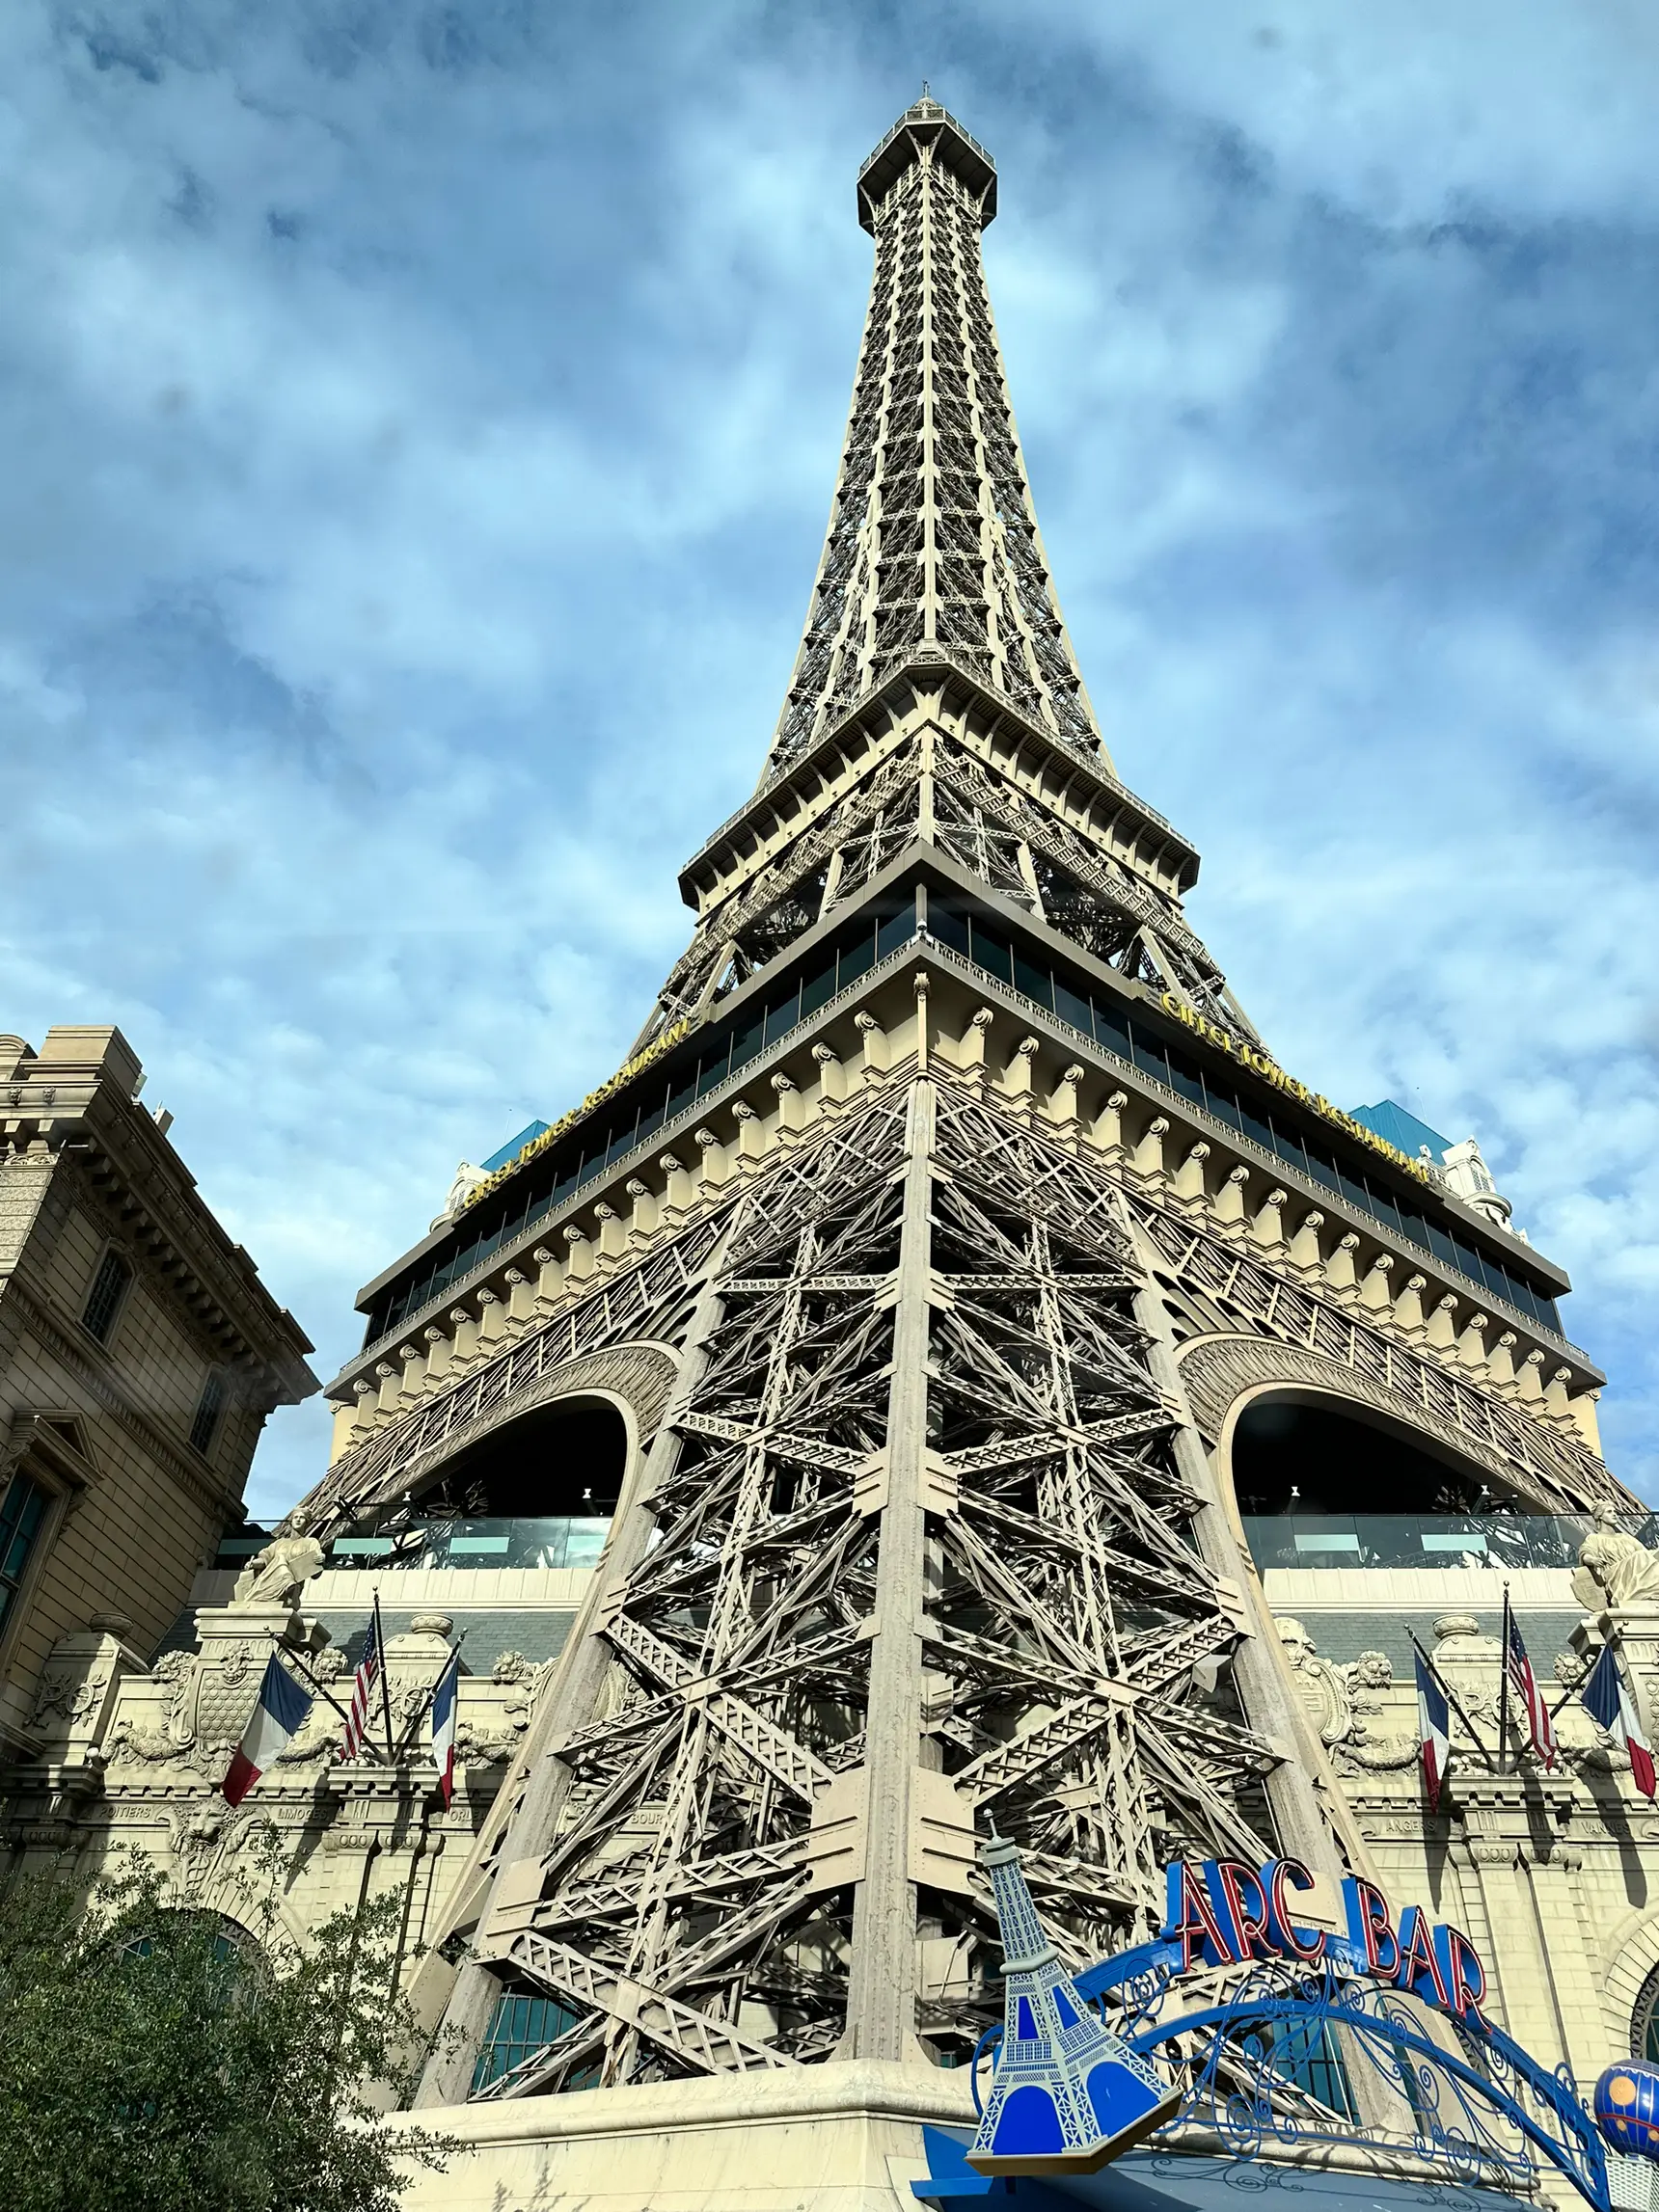 Our Phenomenal Eiffel Tower Restaurant Experience in Las Vegas